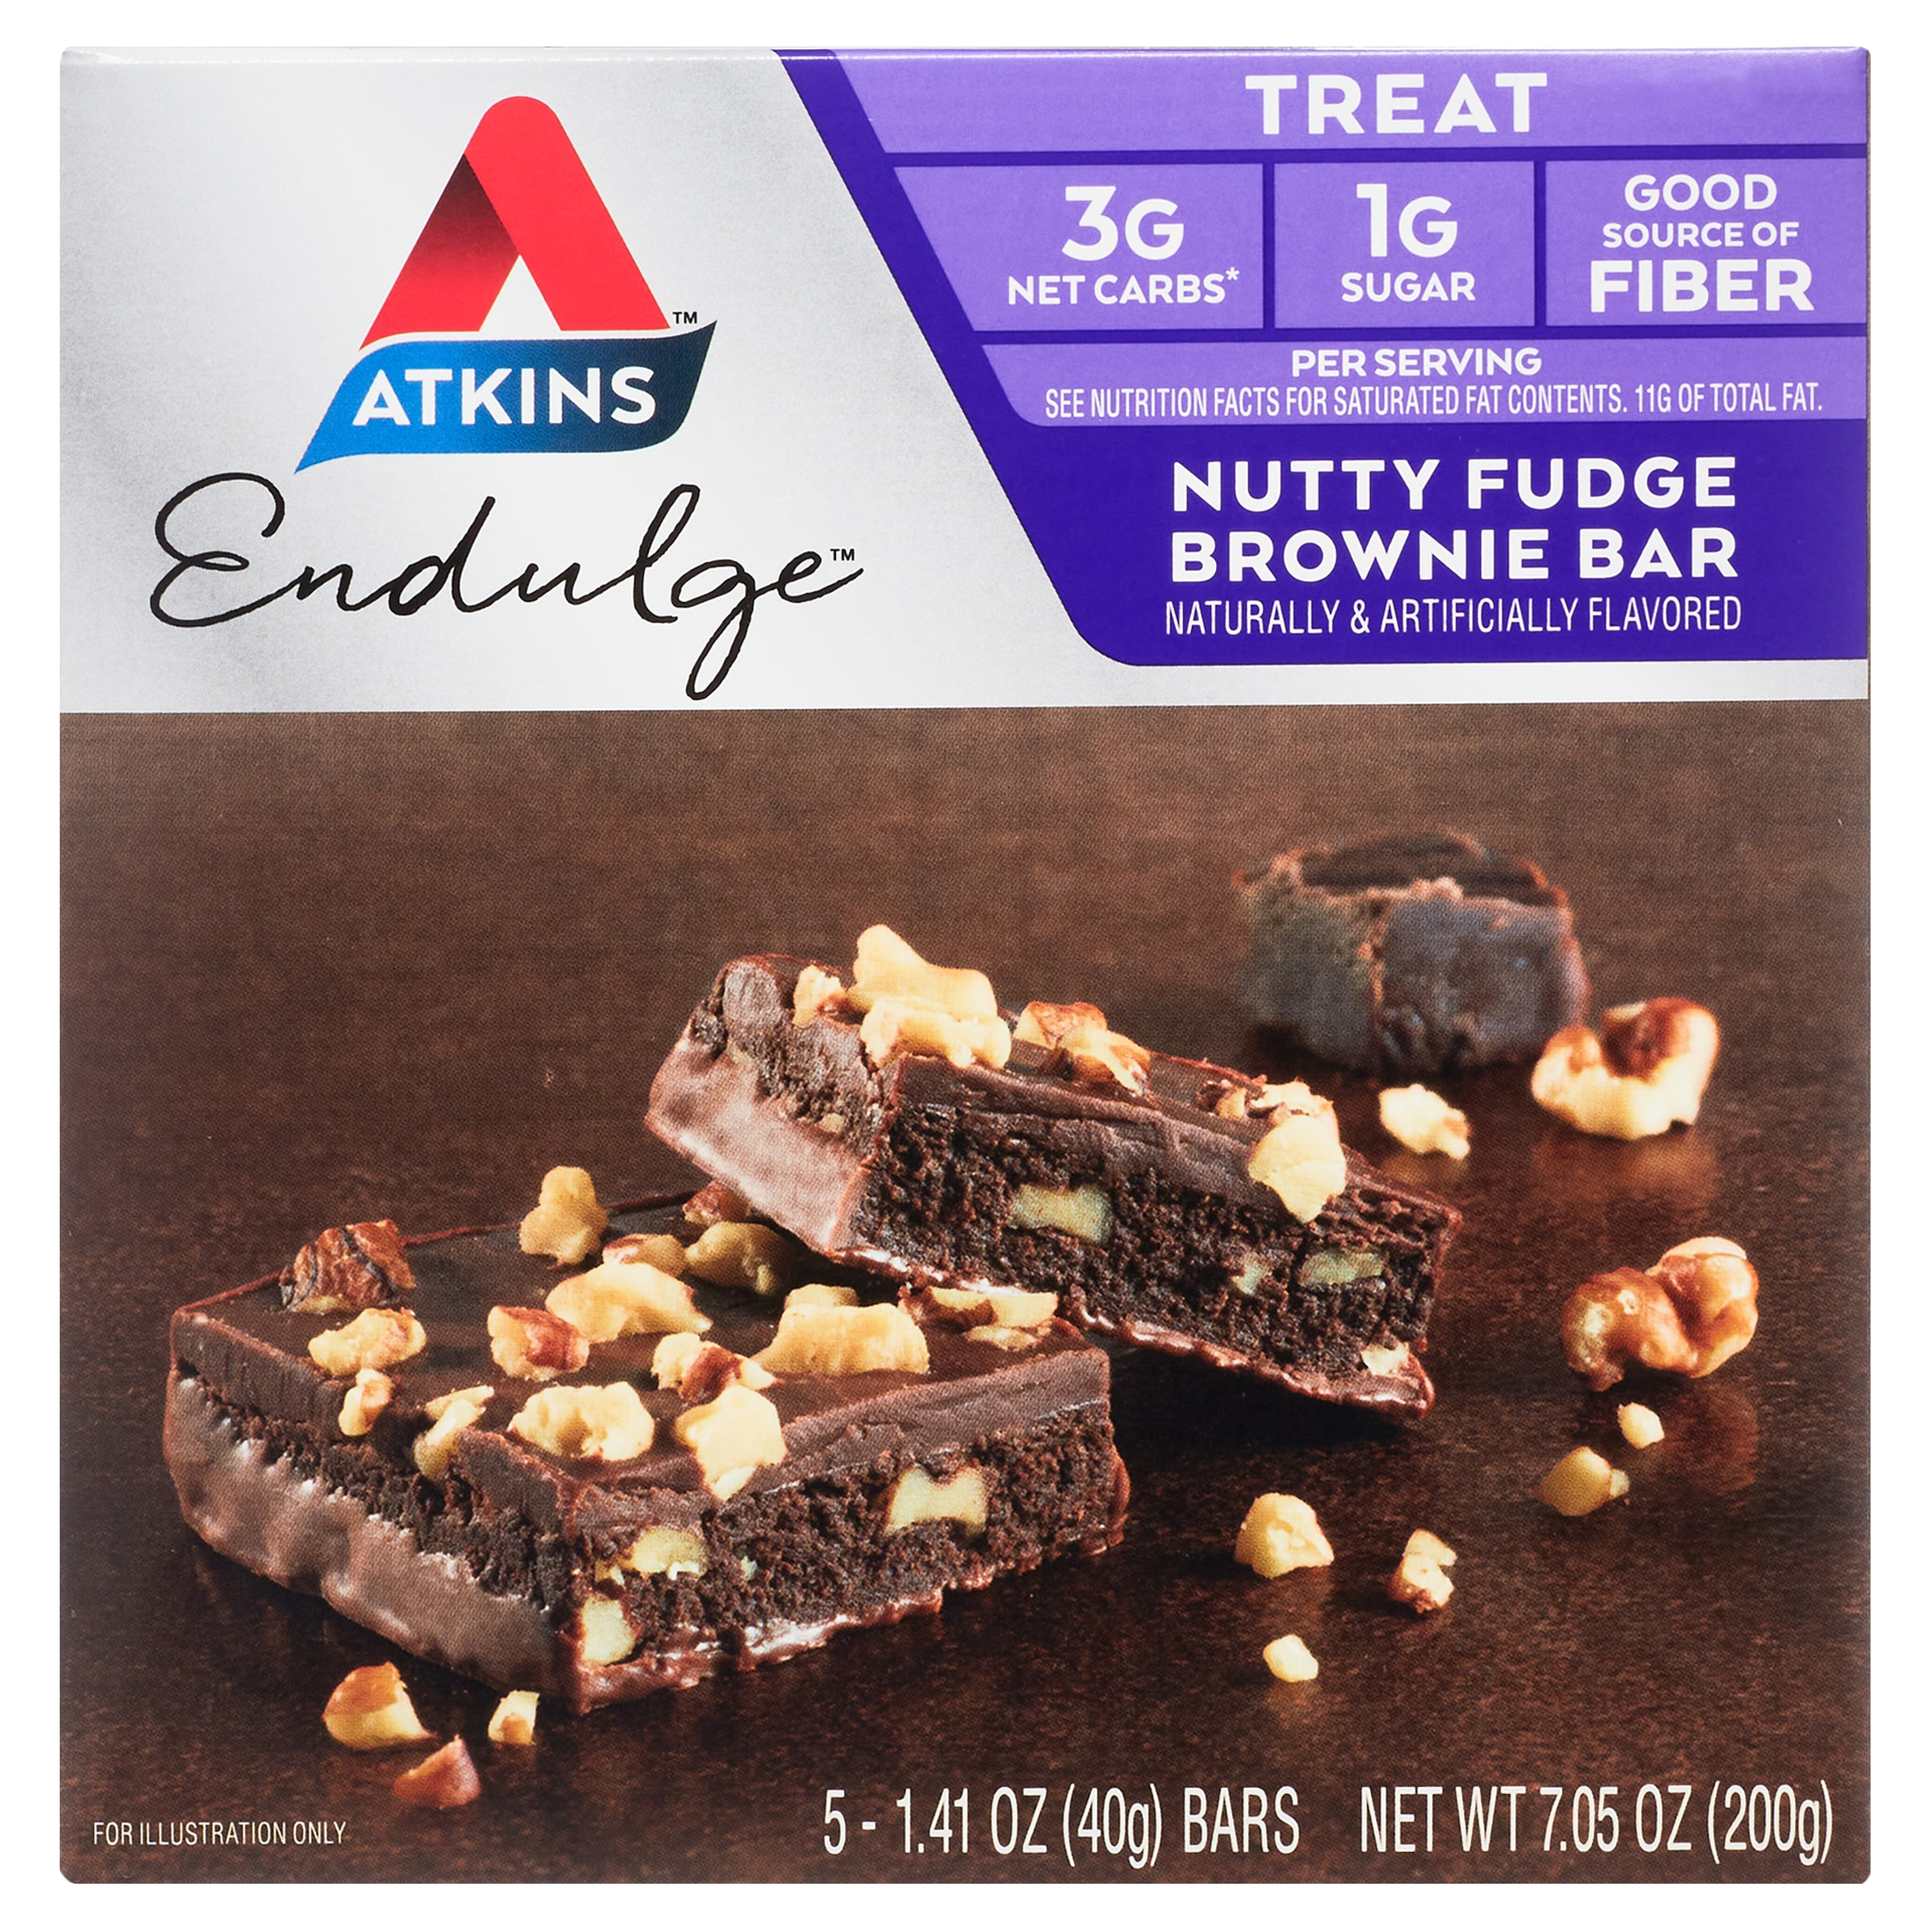 Atkins Endulge Nutty Fudge Brownie, Dessert Favorite, Good Source of Fiber, Low Sugar, 5 Ct - image 1 of 11